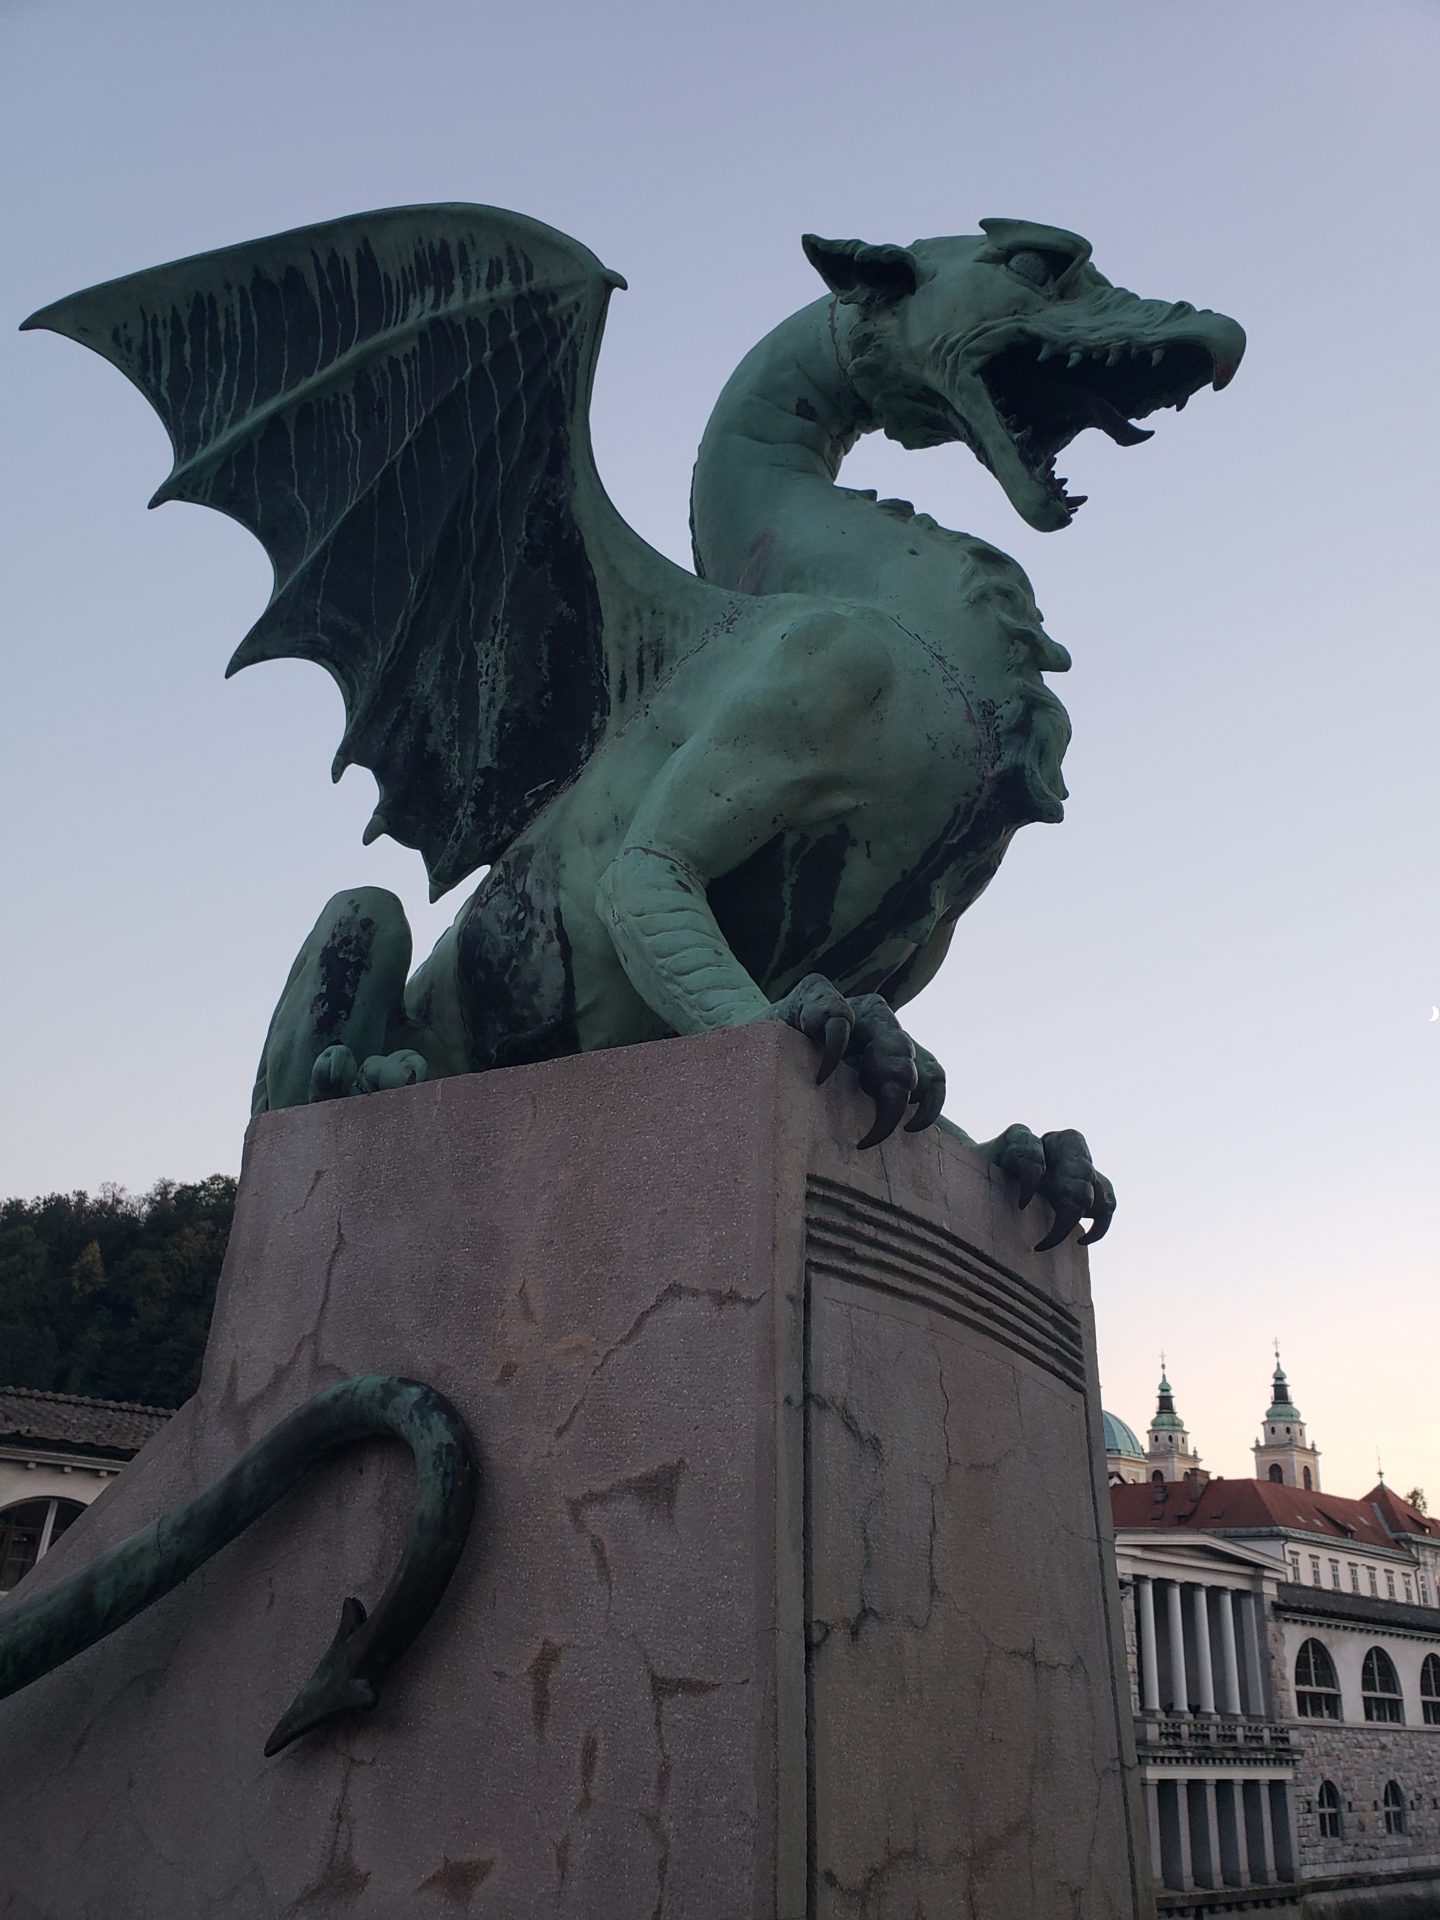 a green dragon statue on a concrete pillar